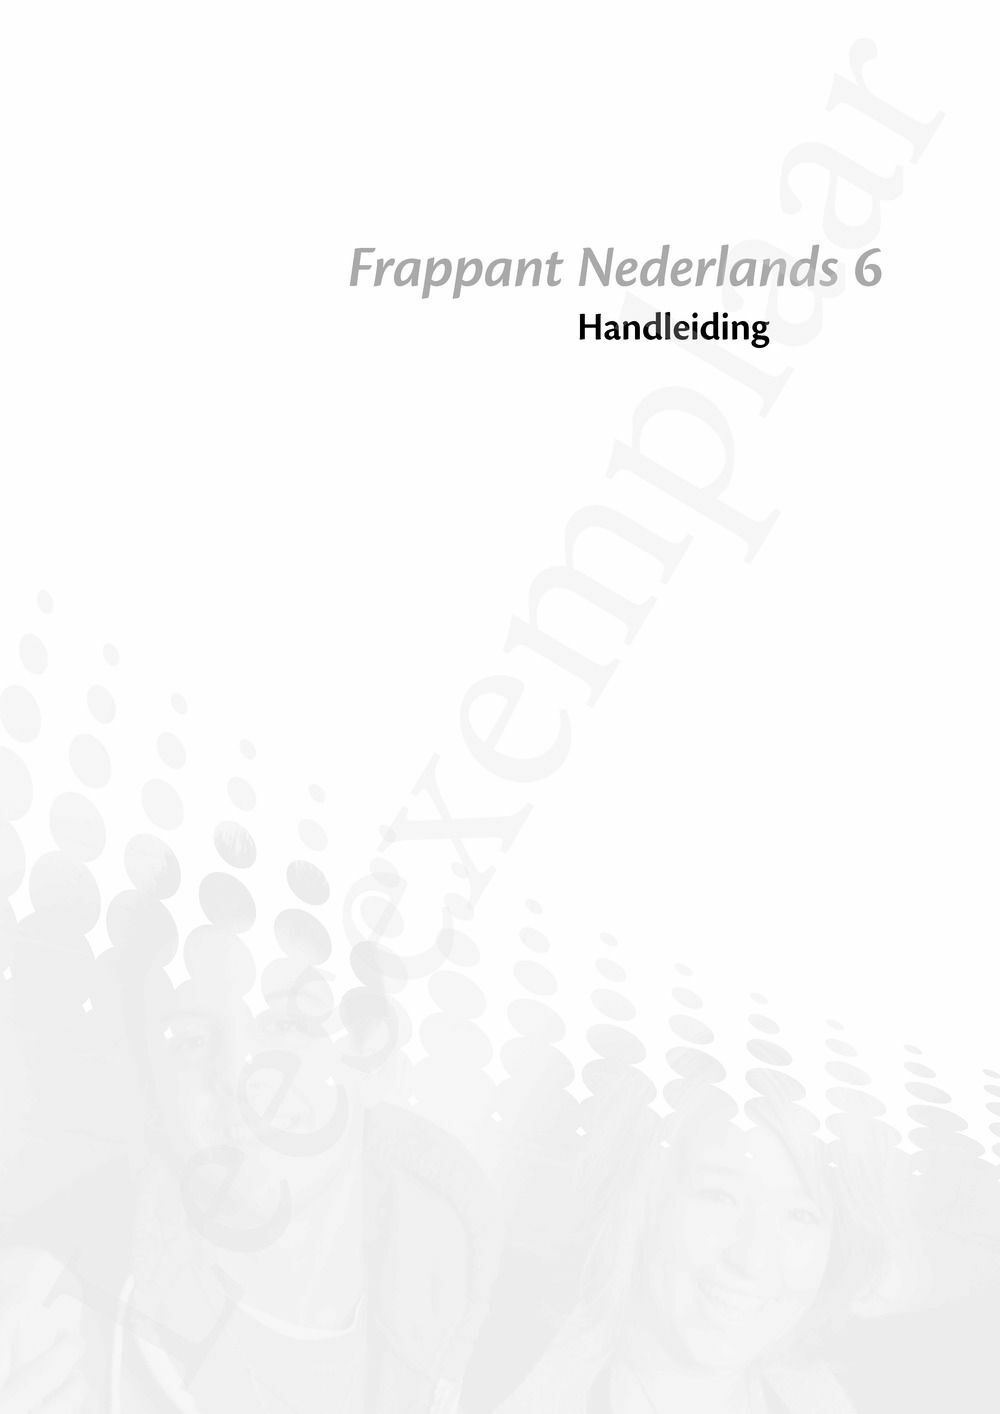 Preview: Frappant Nederlands 6 aso handleiding